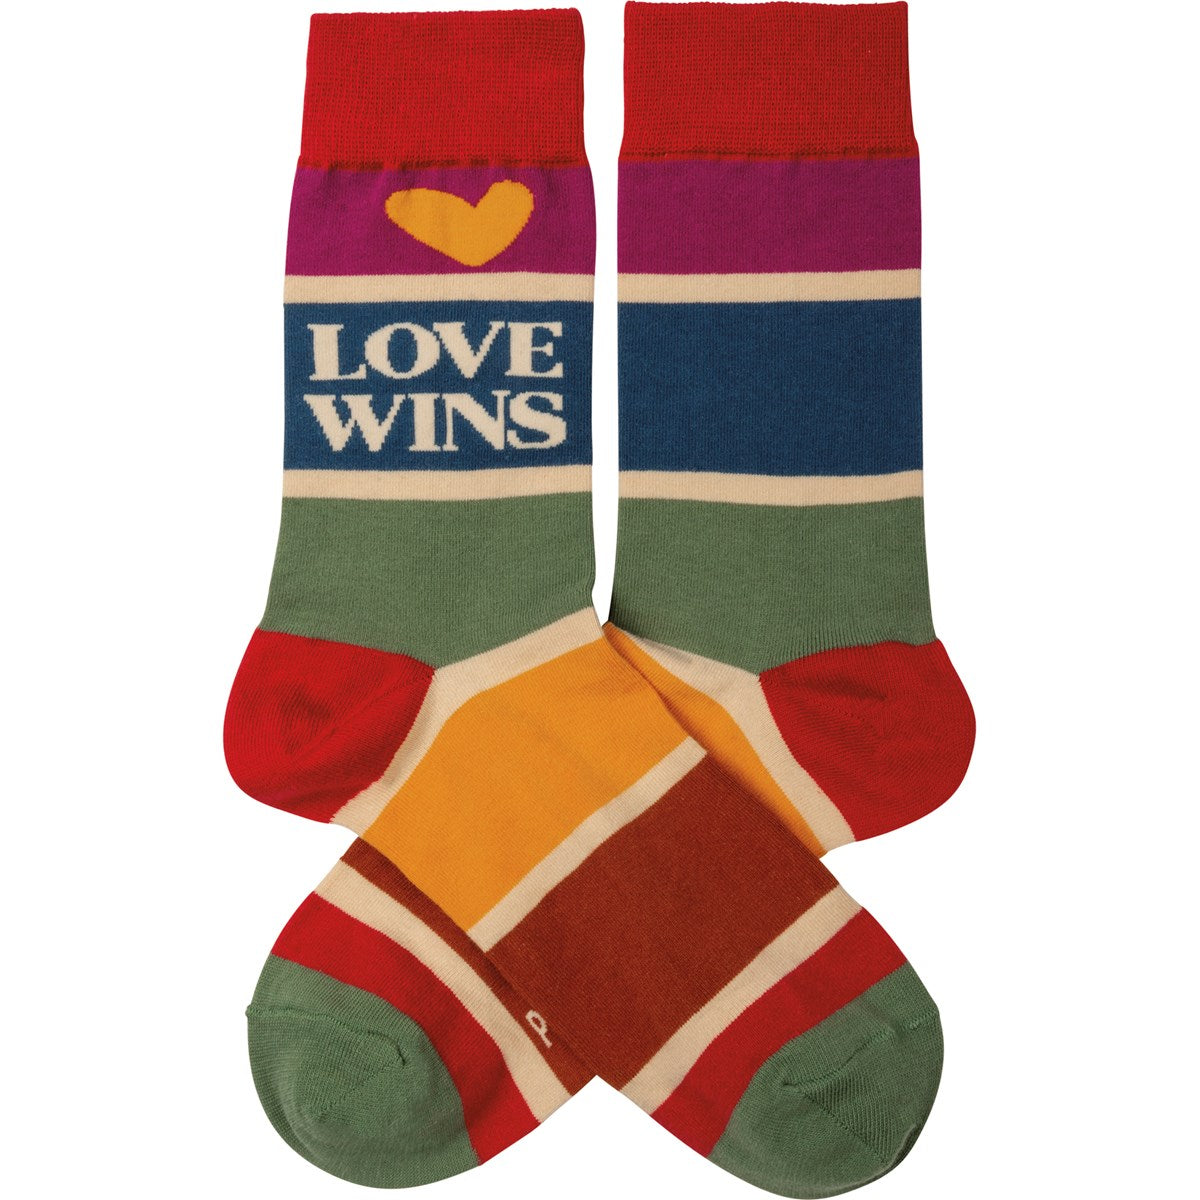 Socks - "Love Wins"